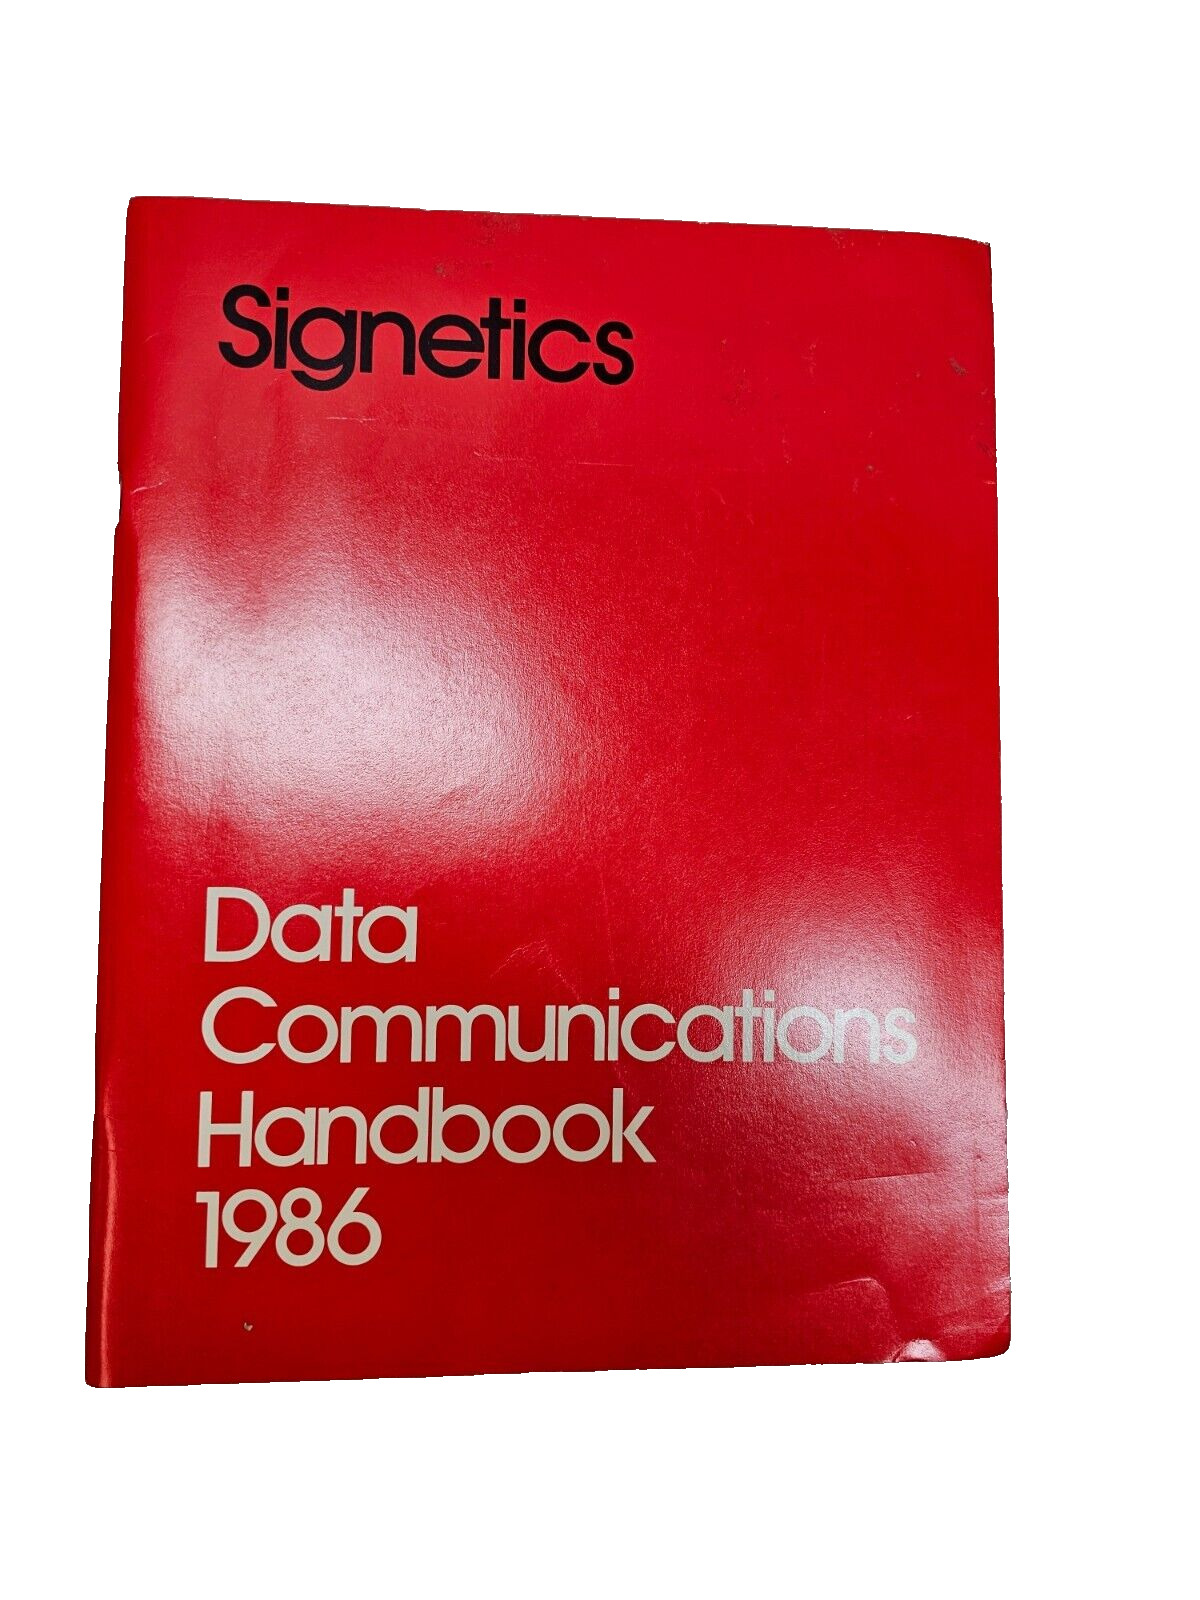 Vintage Signetics Data Communications Handbook 1986, Old Tech/Comm Literature